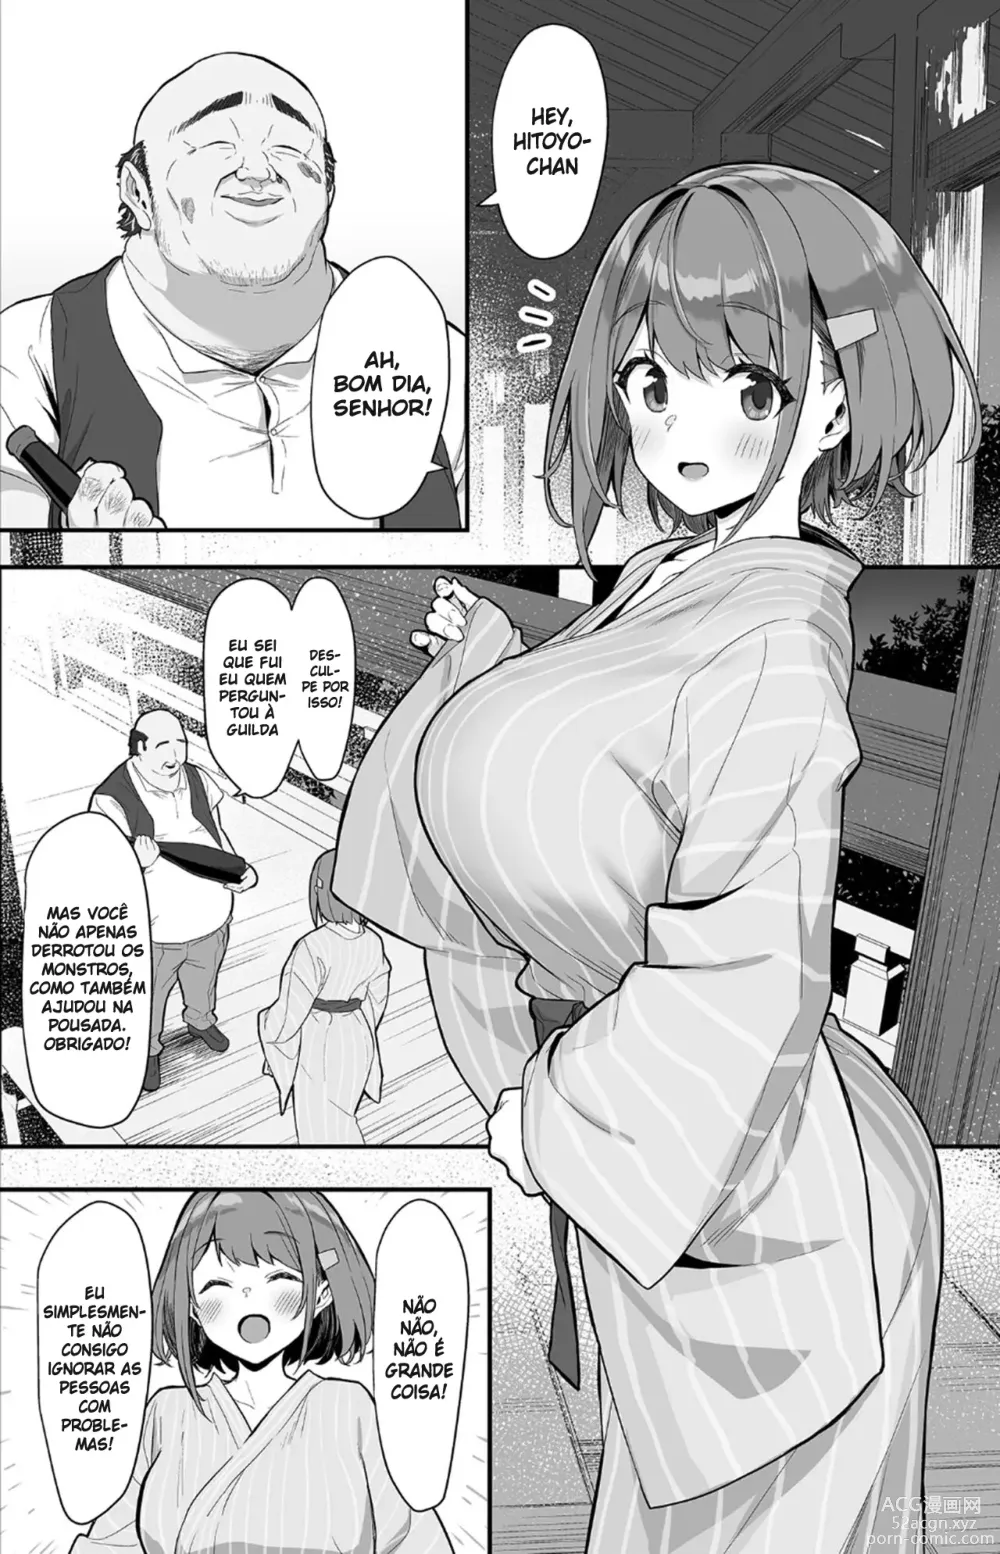 Page 2 of doujinshi O Sofrimento de Hitoyo-chan 2